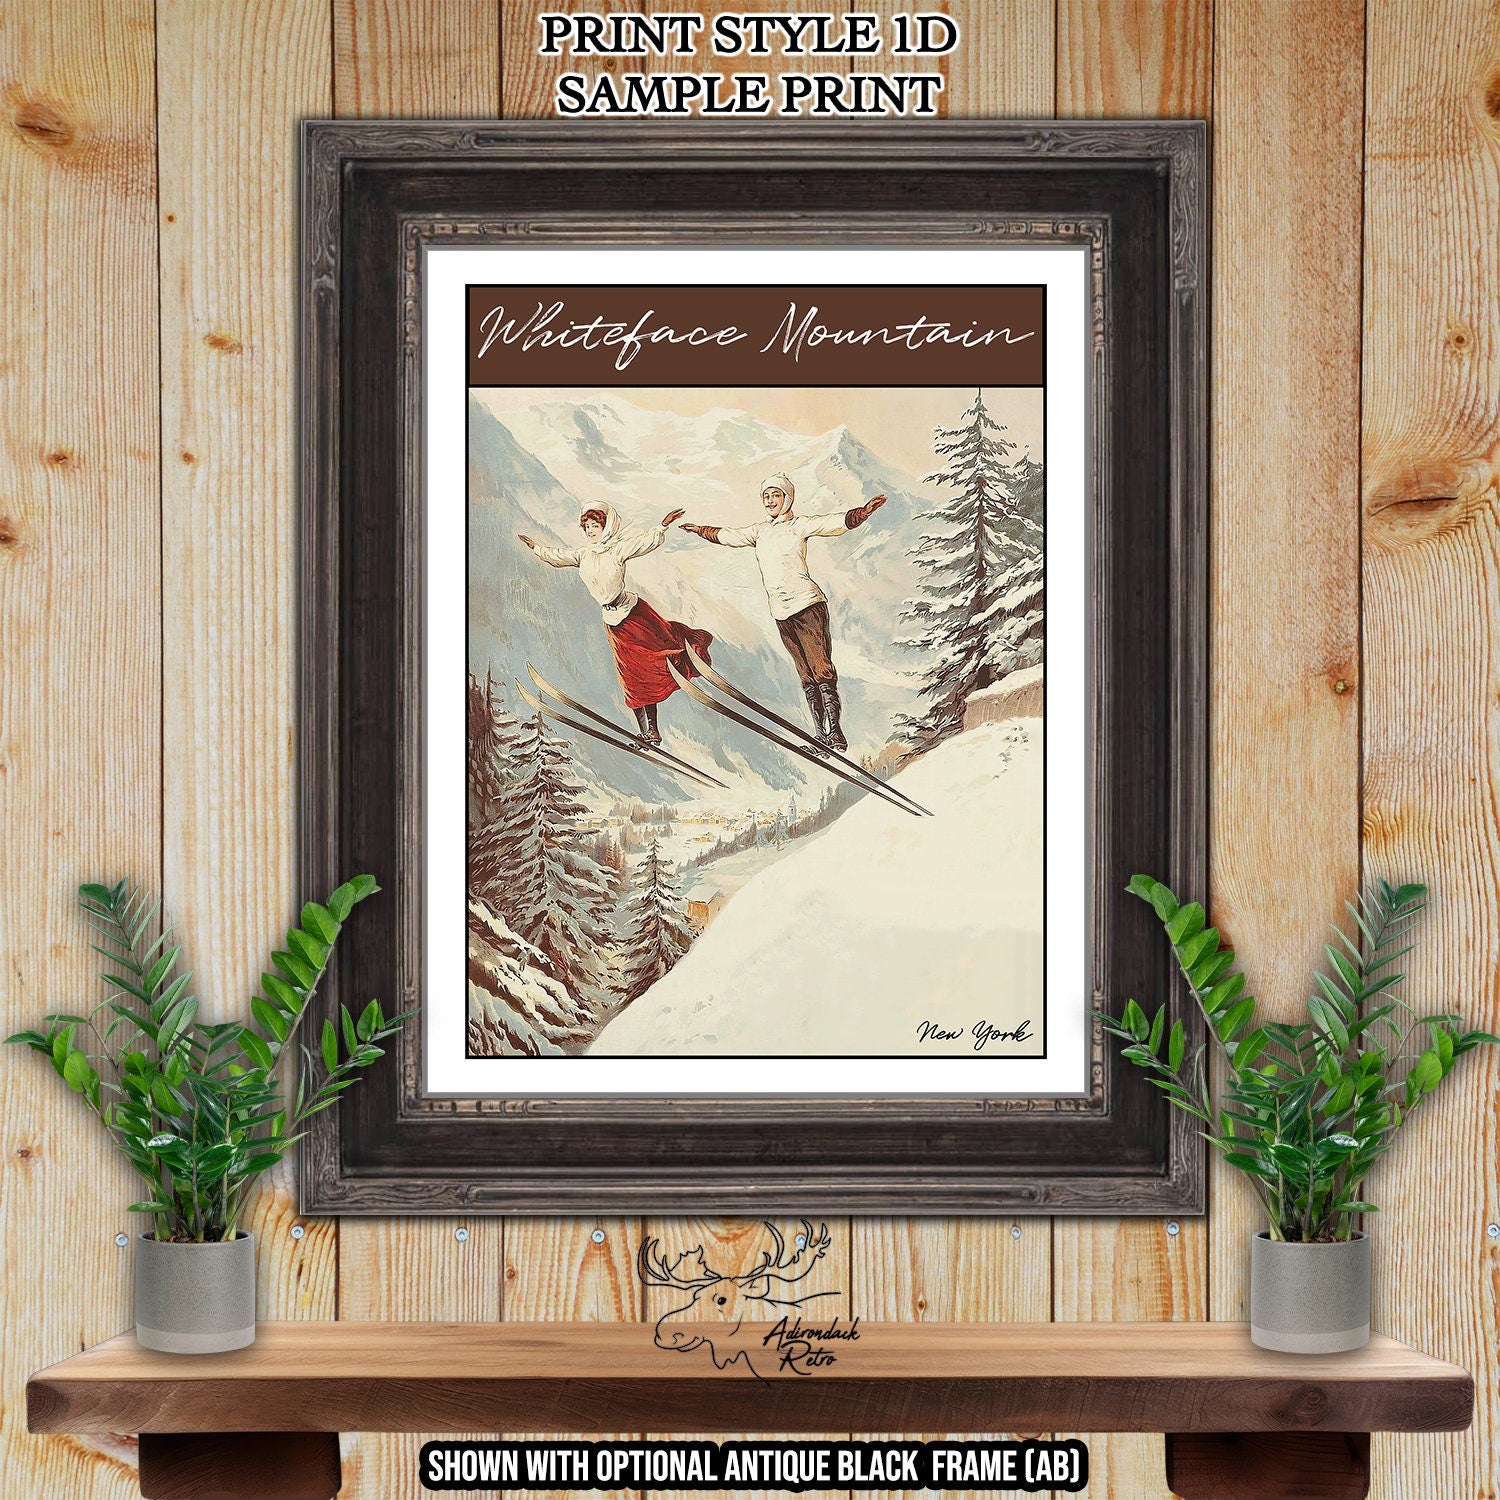 Stowe Mountain Vermont Retro Ski Resort Print